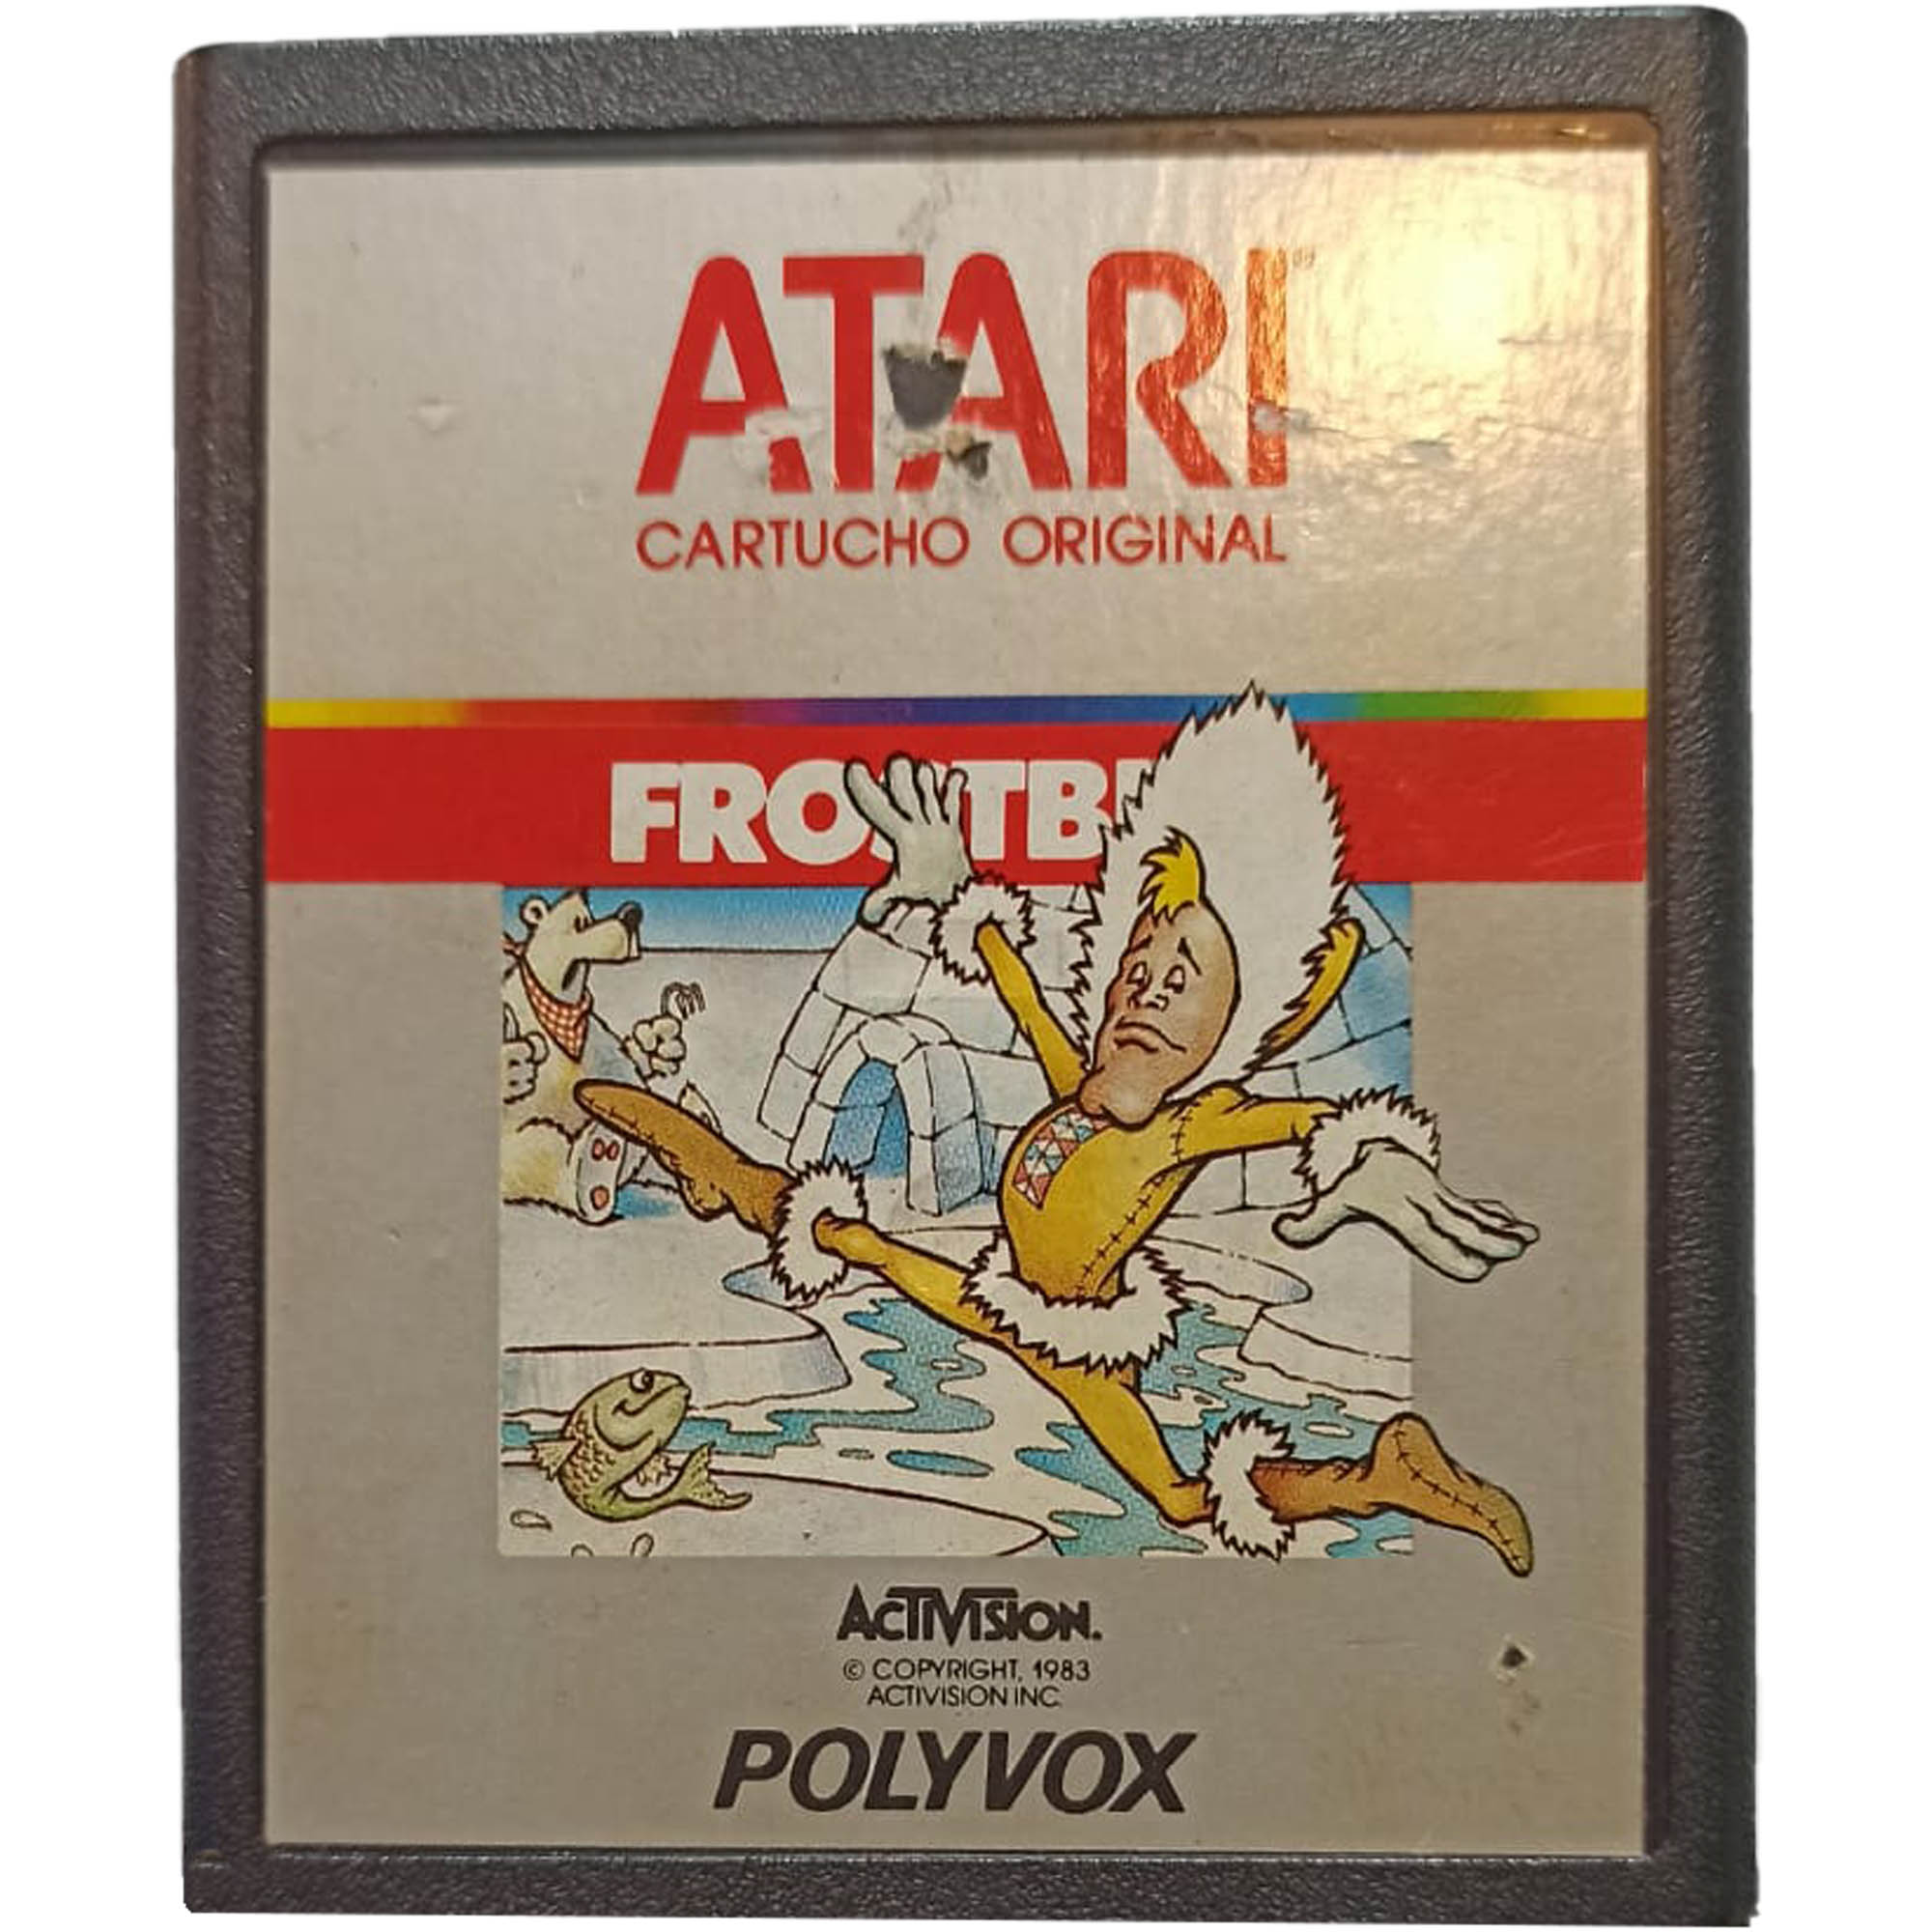 Fita Cartucho Frostbite Atari Polyvox Usado